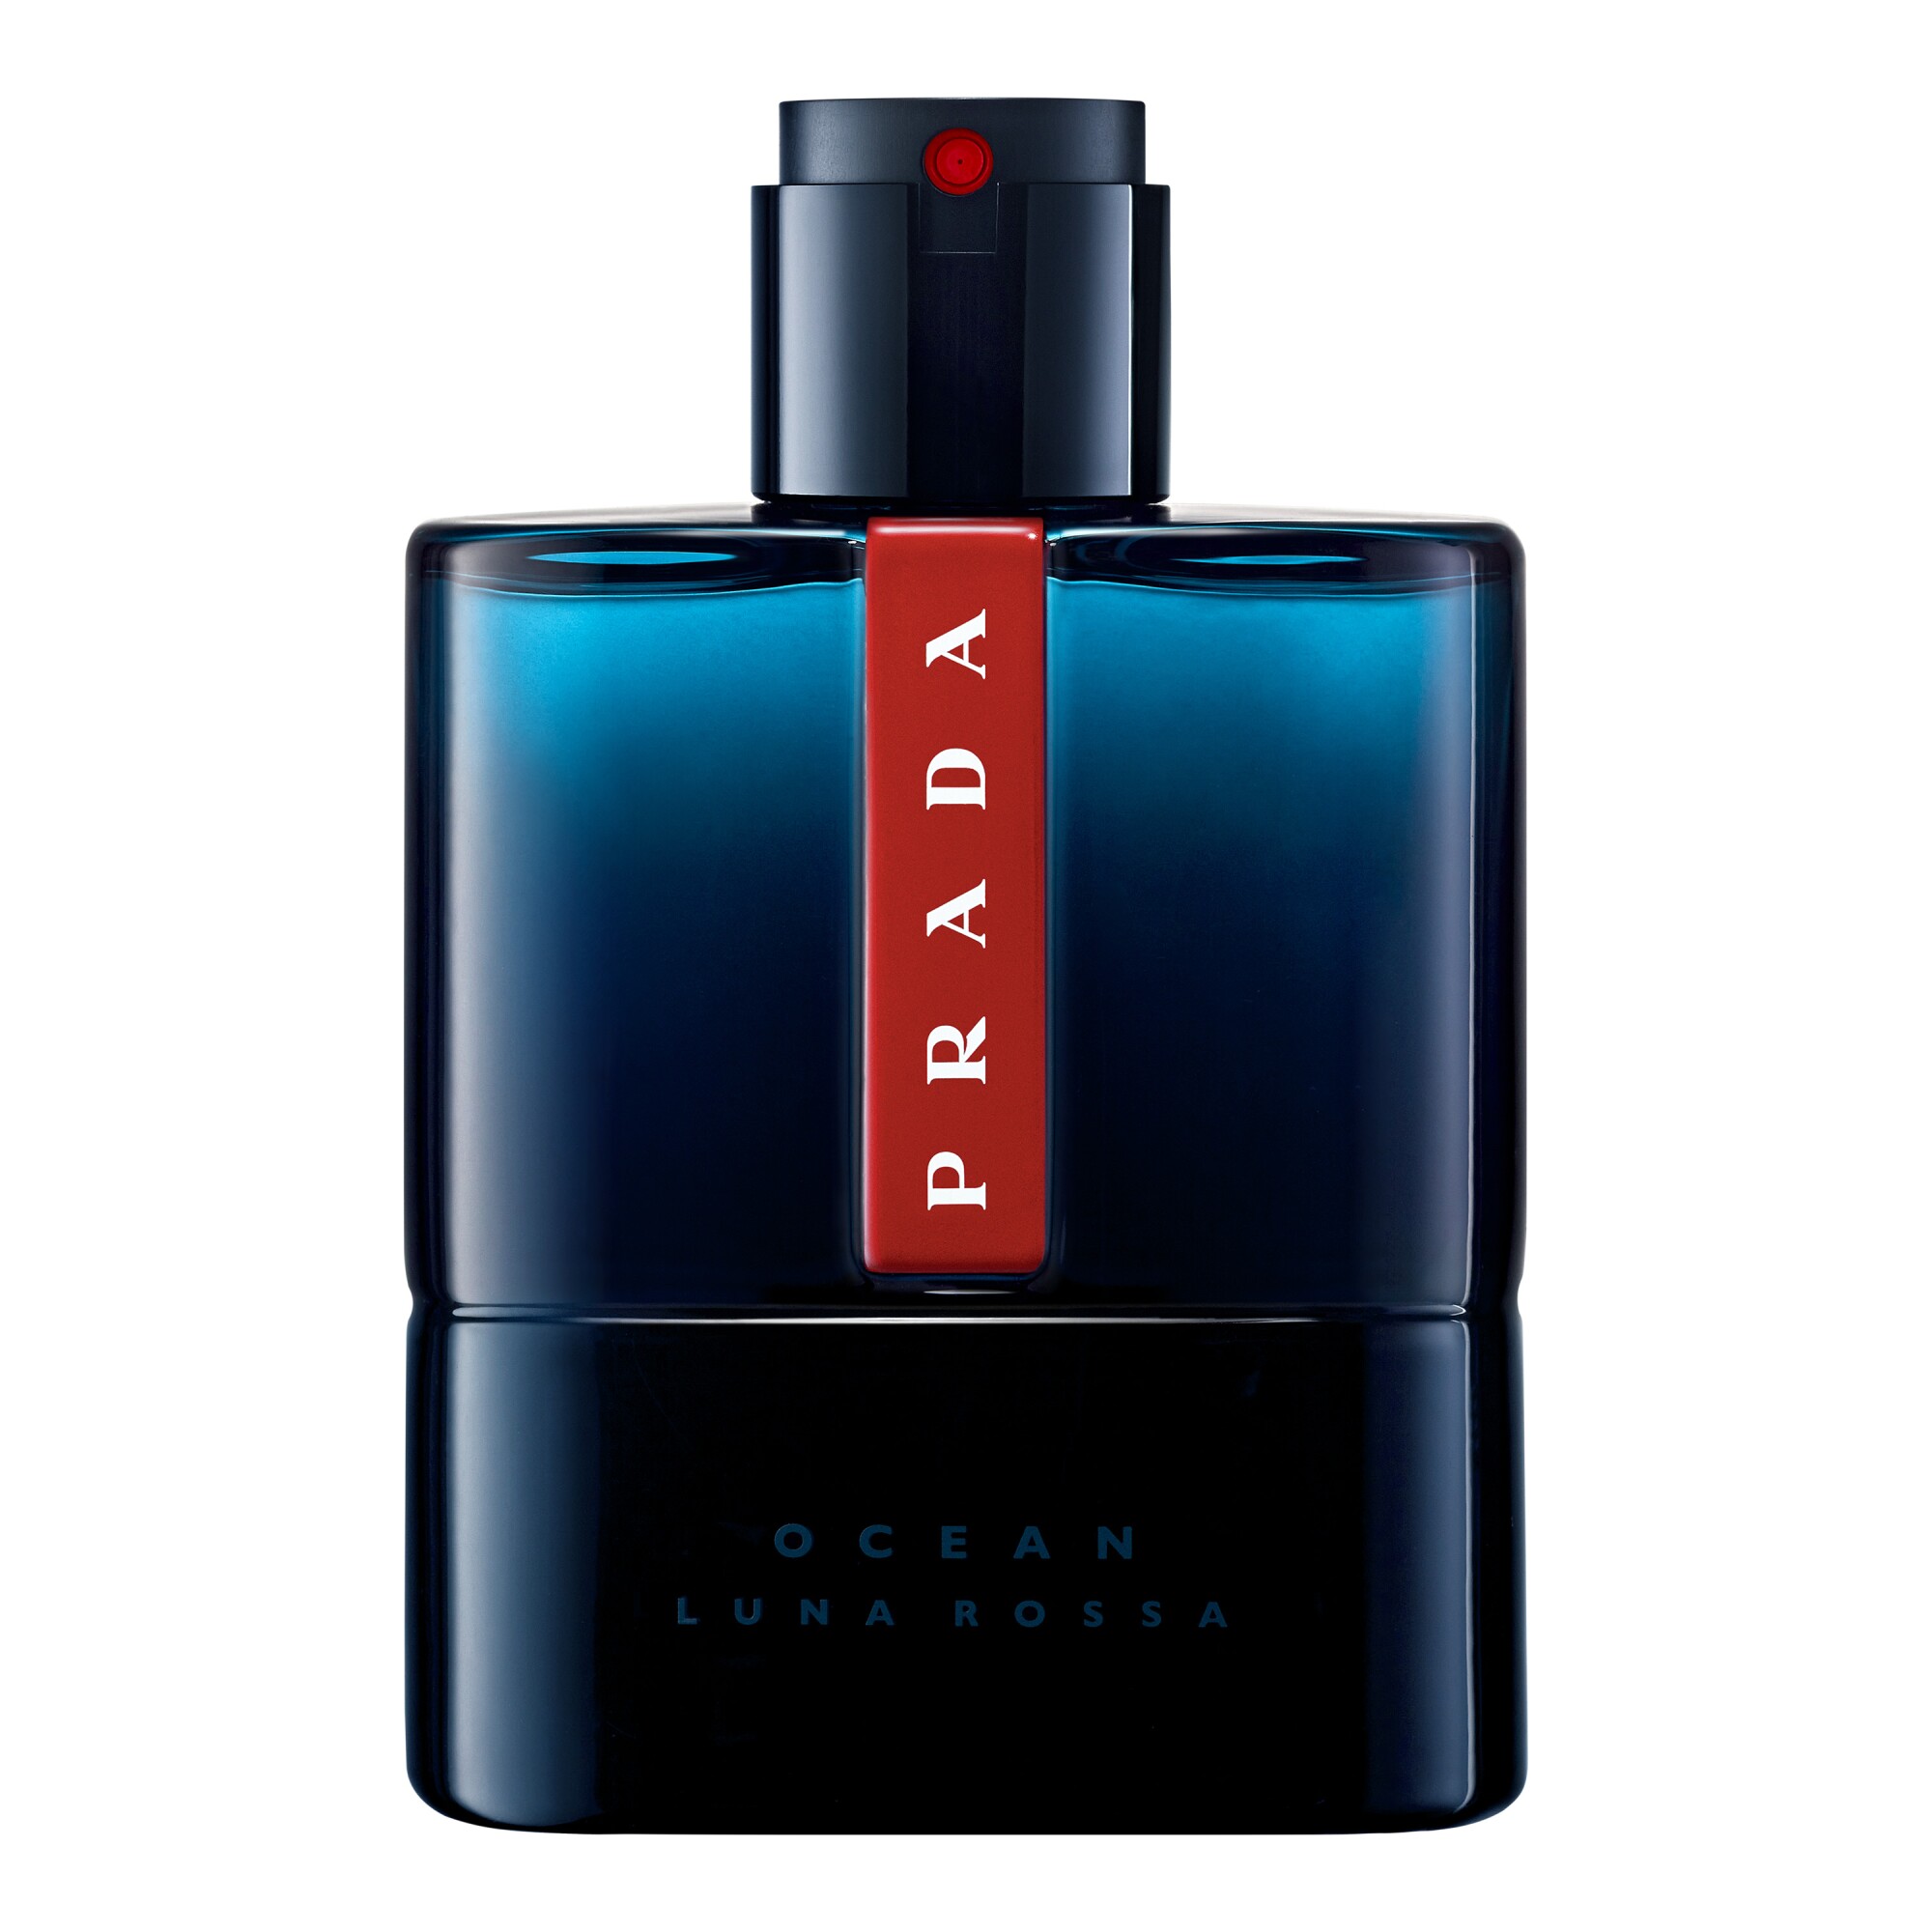 Dark blue fragrance bottle with a red Prada label